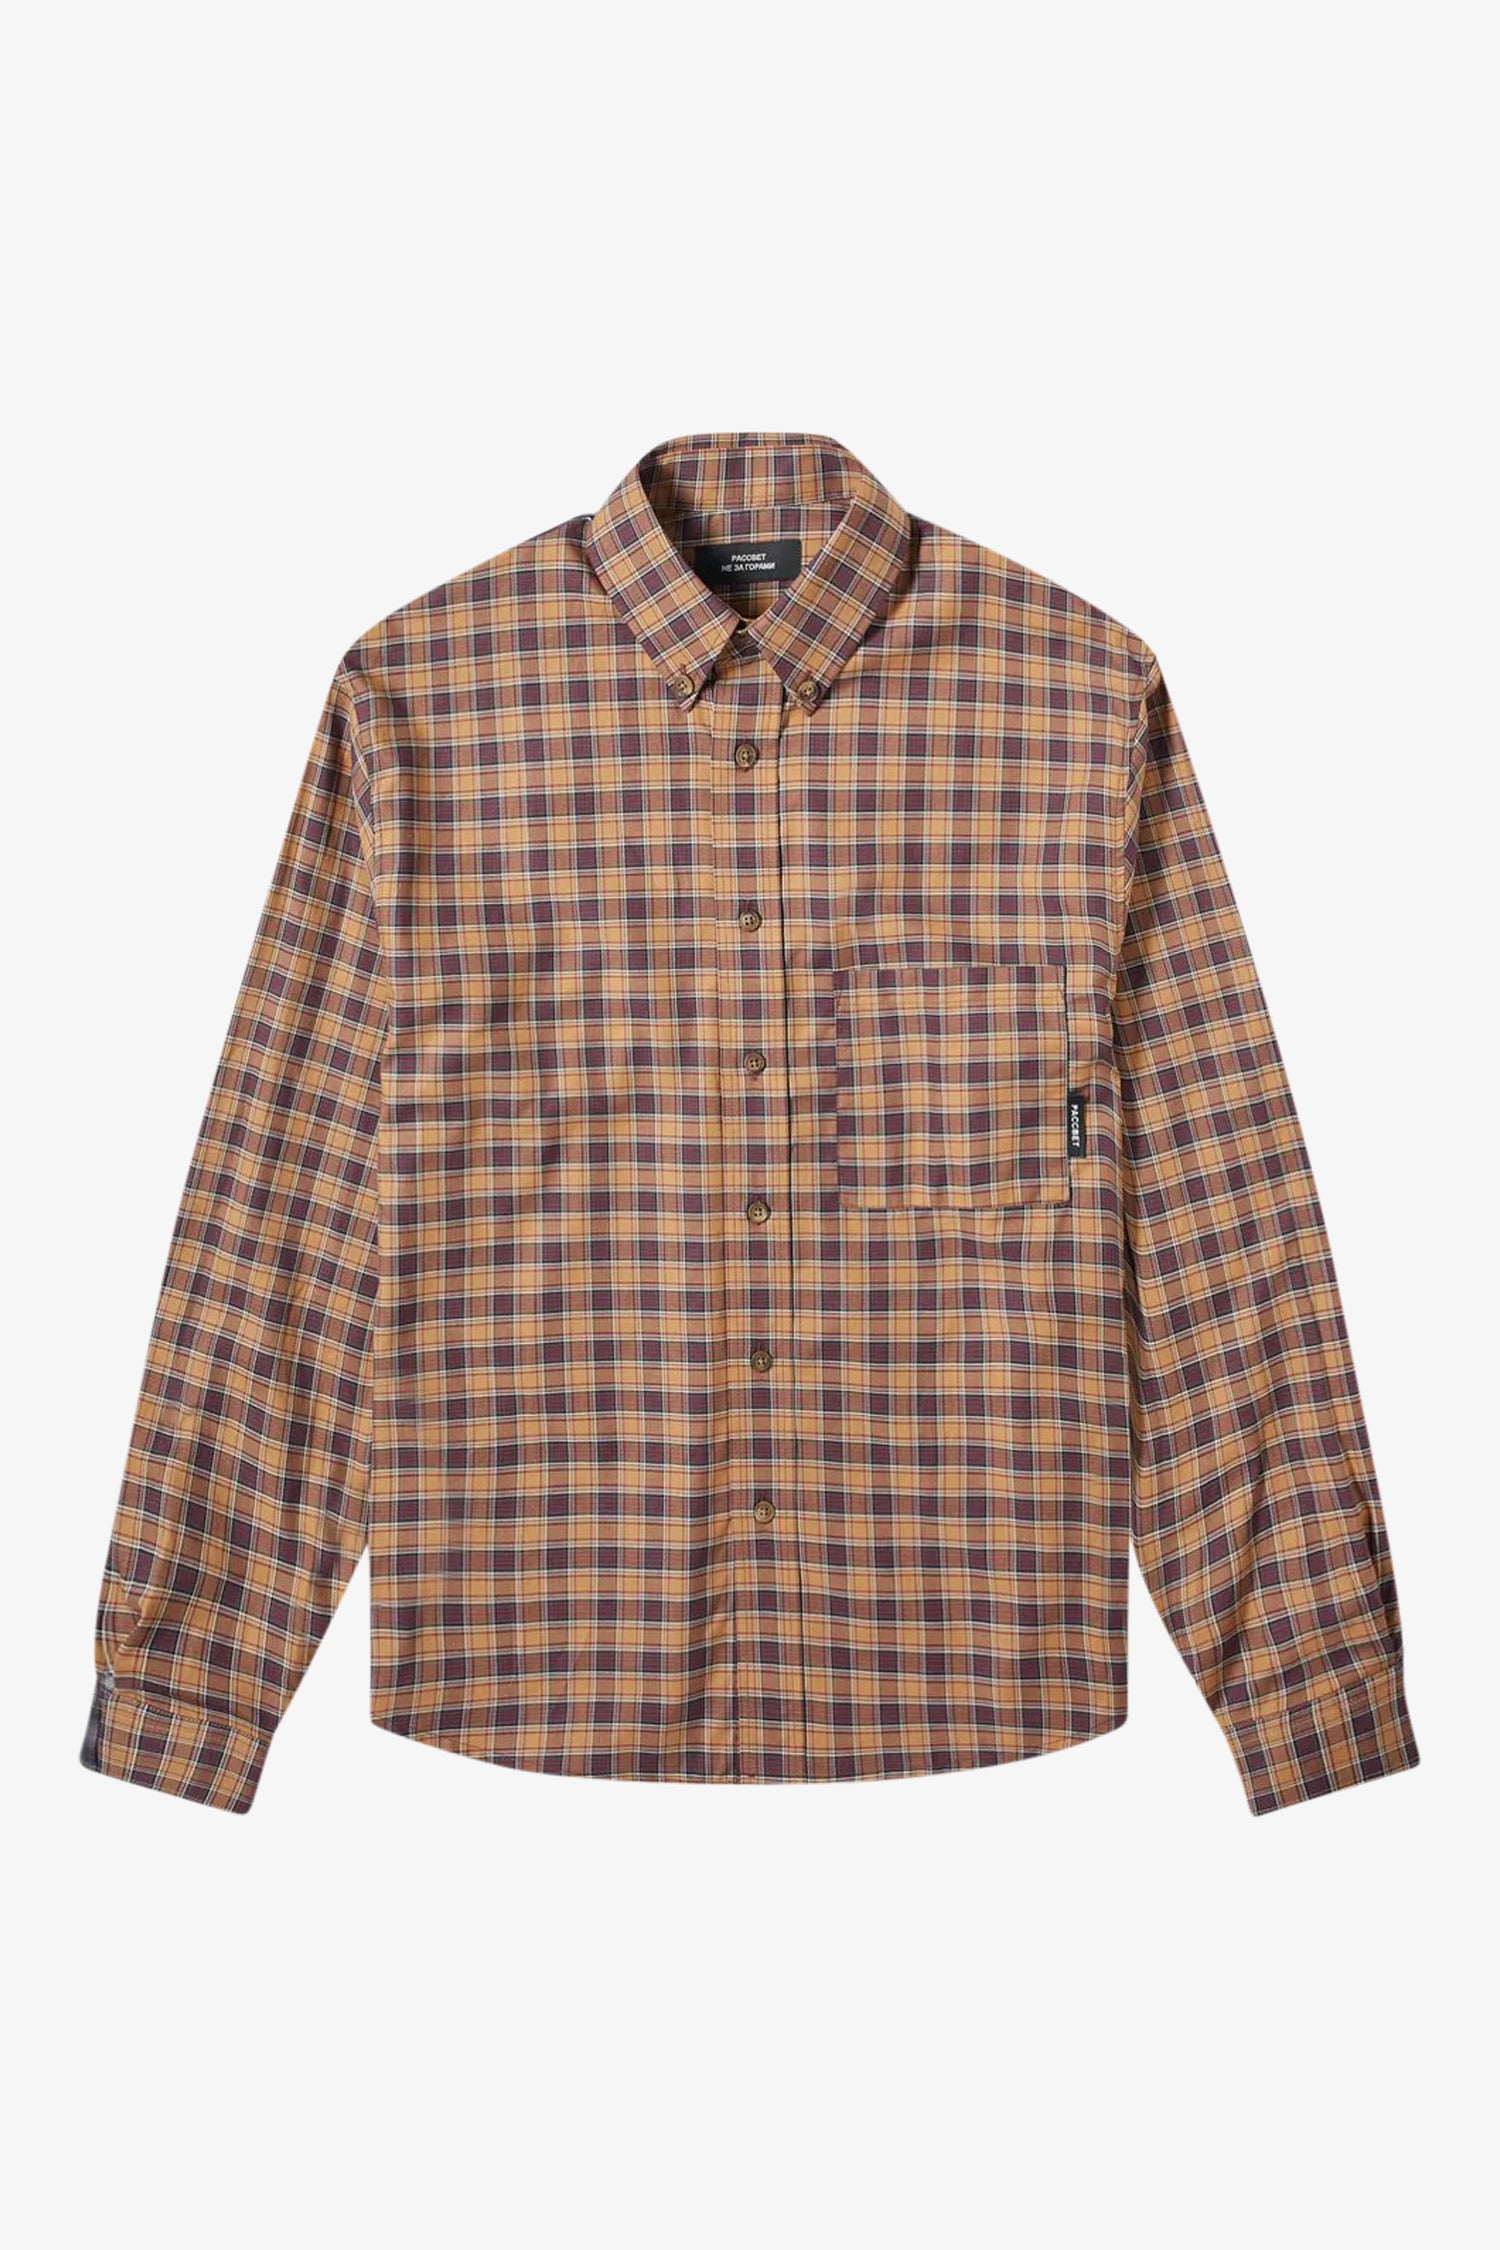 Selectshop FRAME - RASSVET Mixed Check Shirt Shirt Dubai